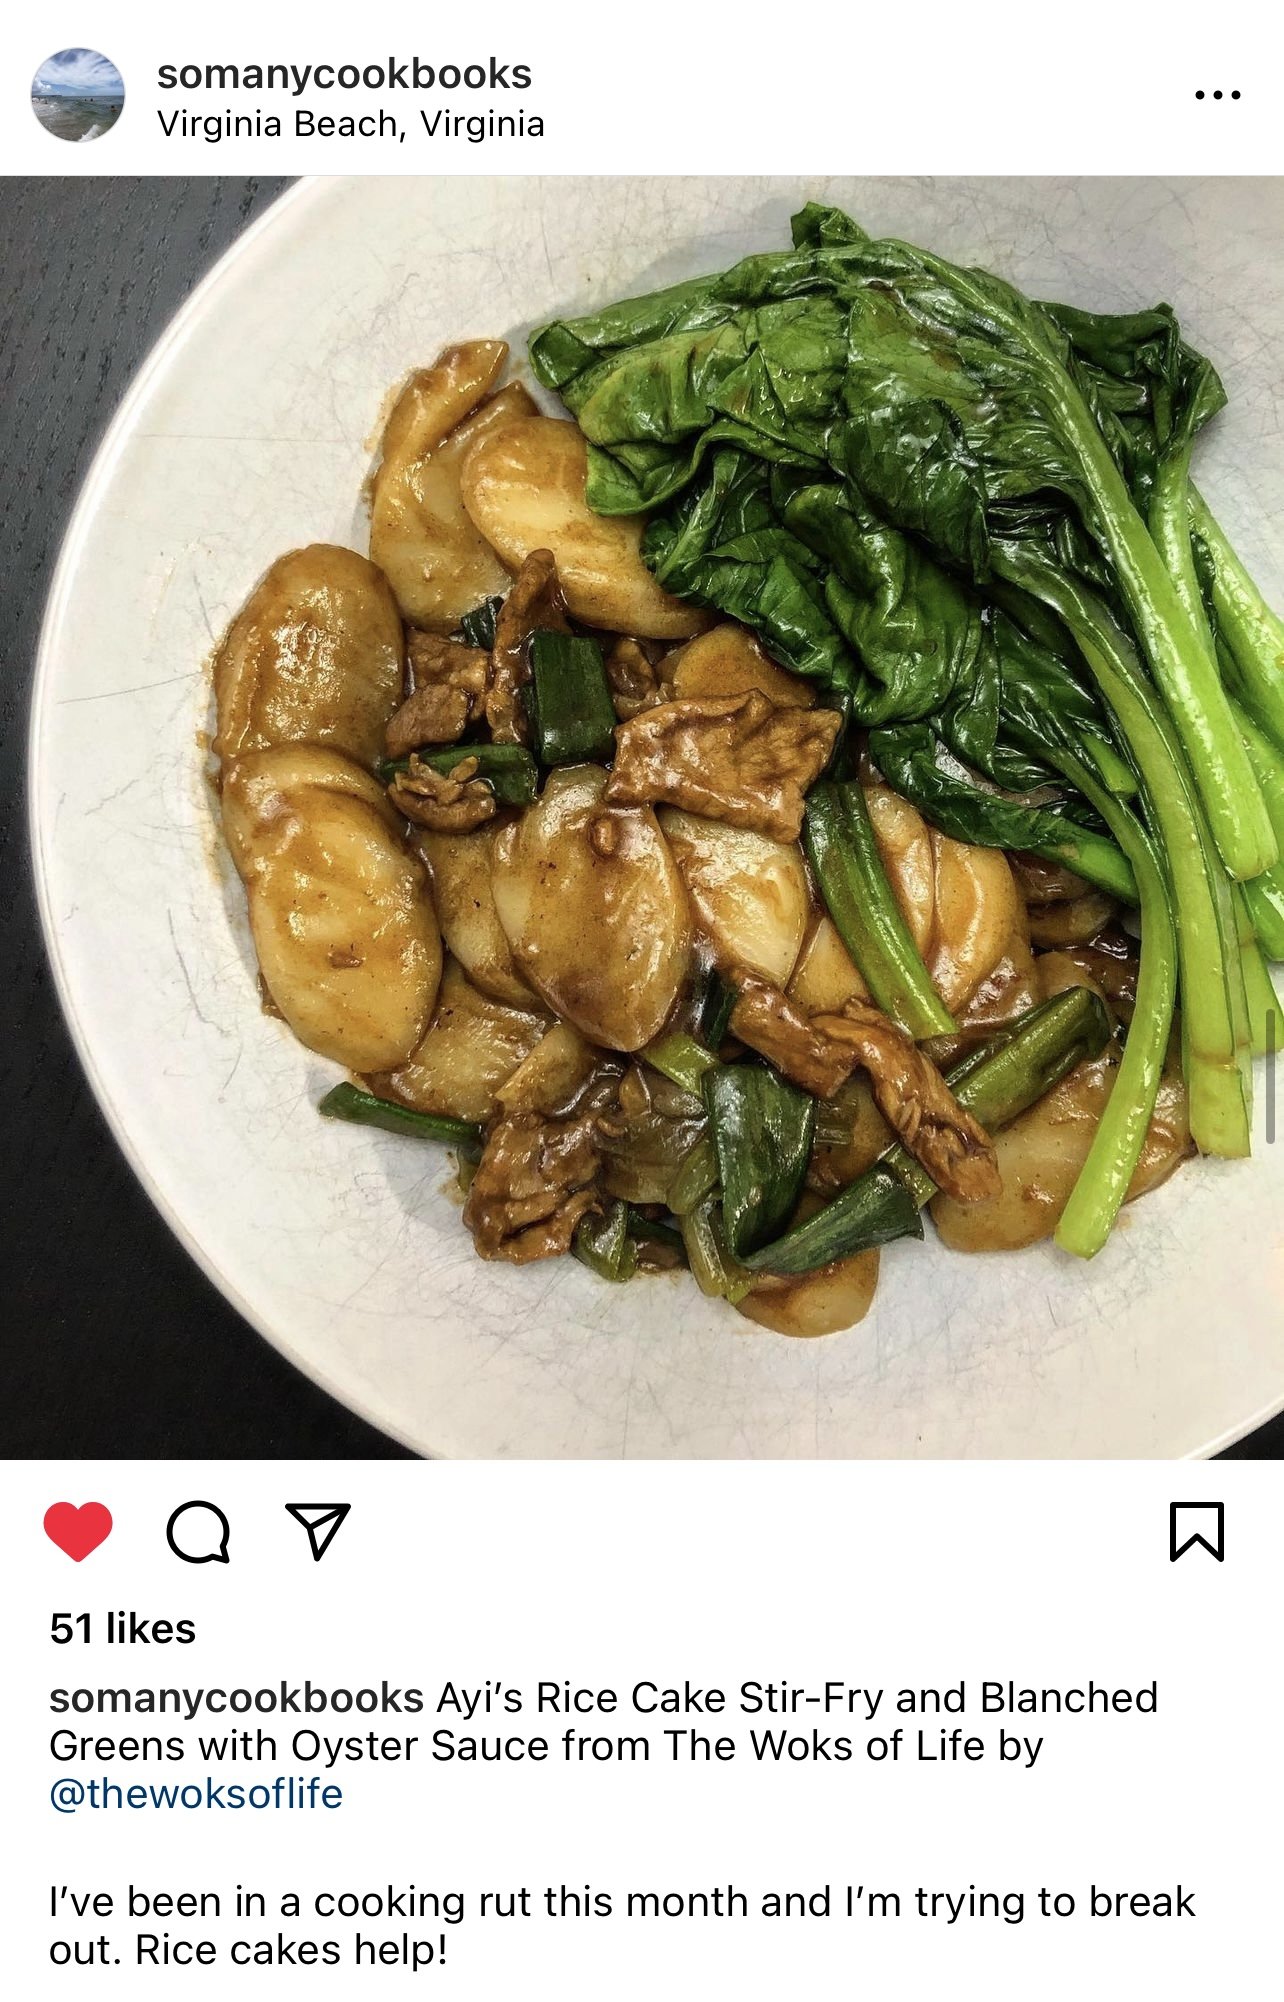 Ayi's Rice Cake Stir-fry on Instagram from The Woks of Life Cookbook